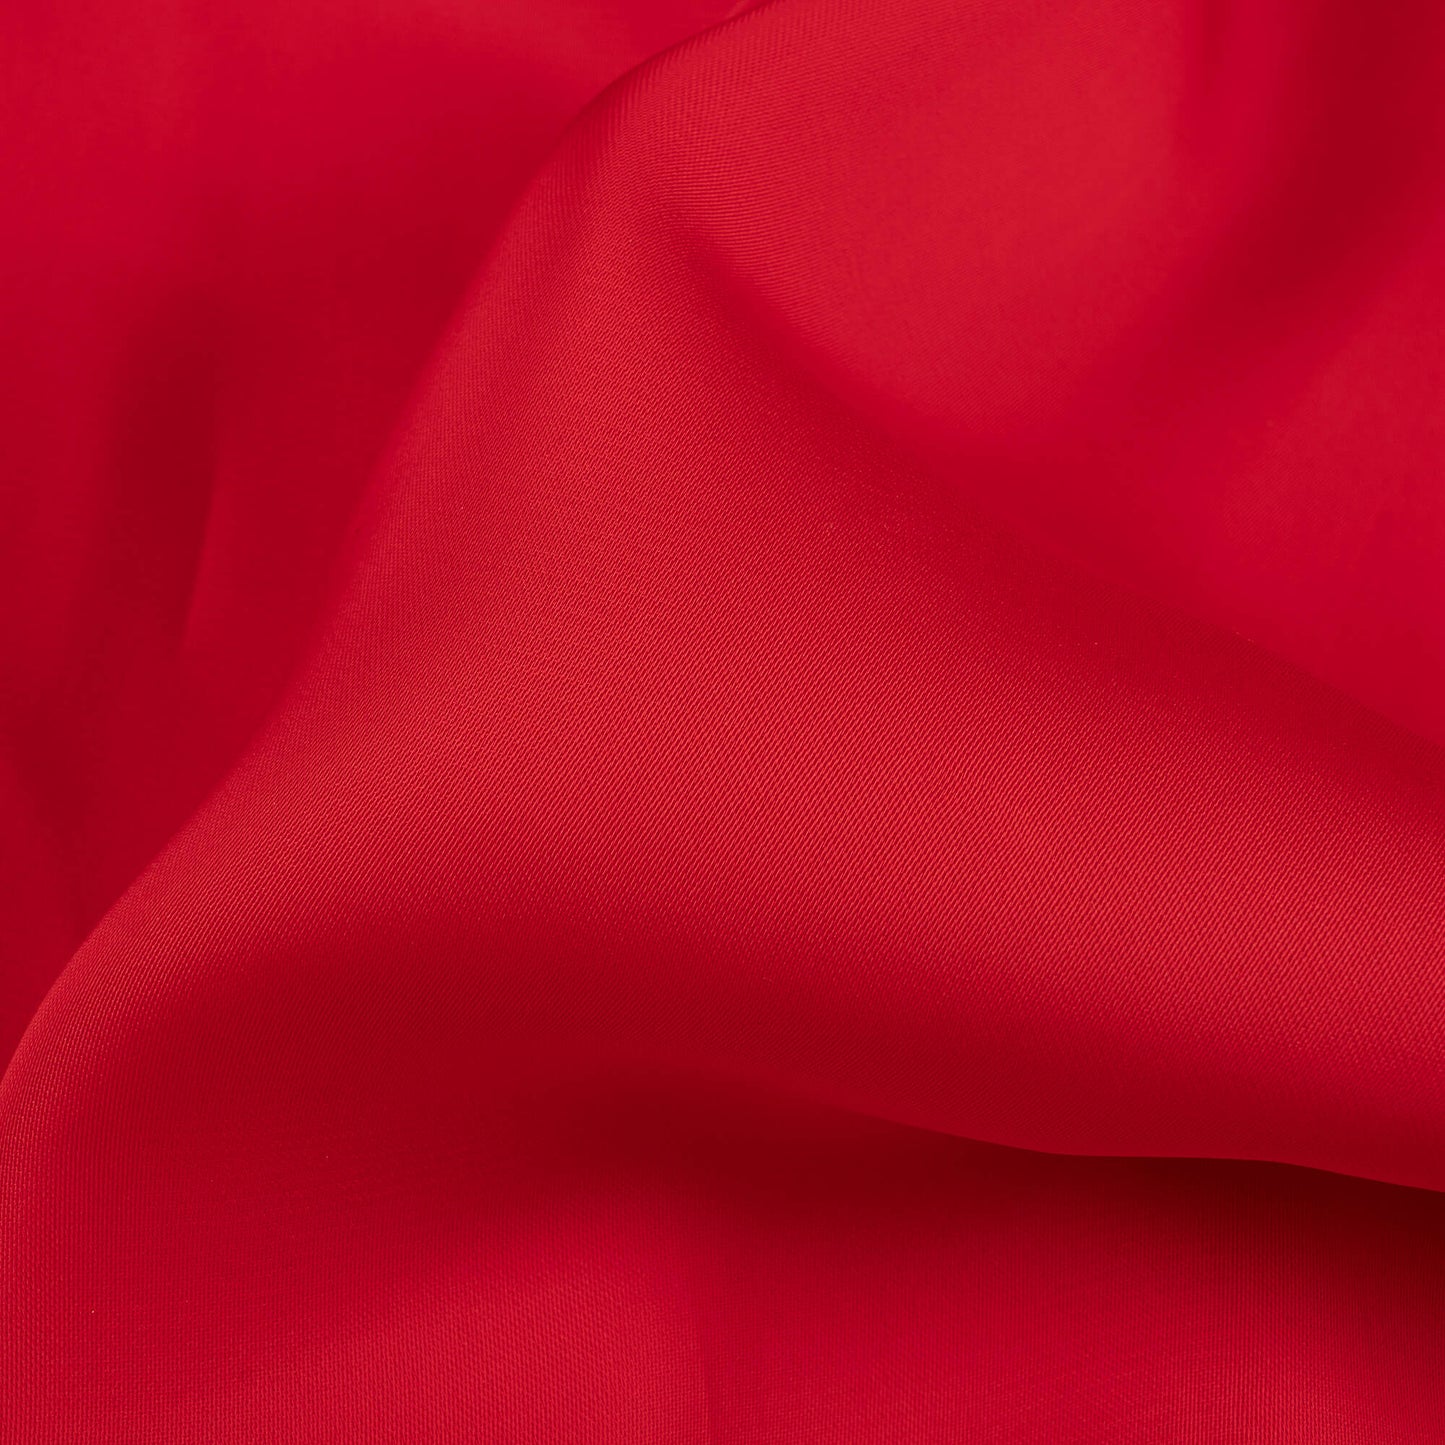 Vermilion Red Plain Imported Satin Fabric